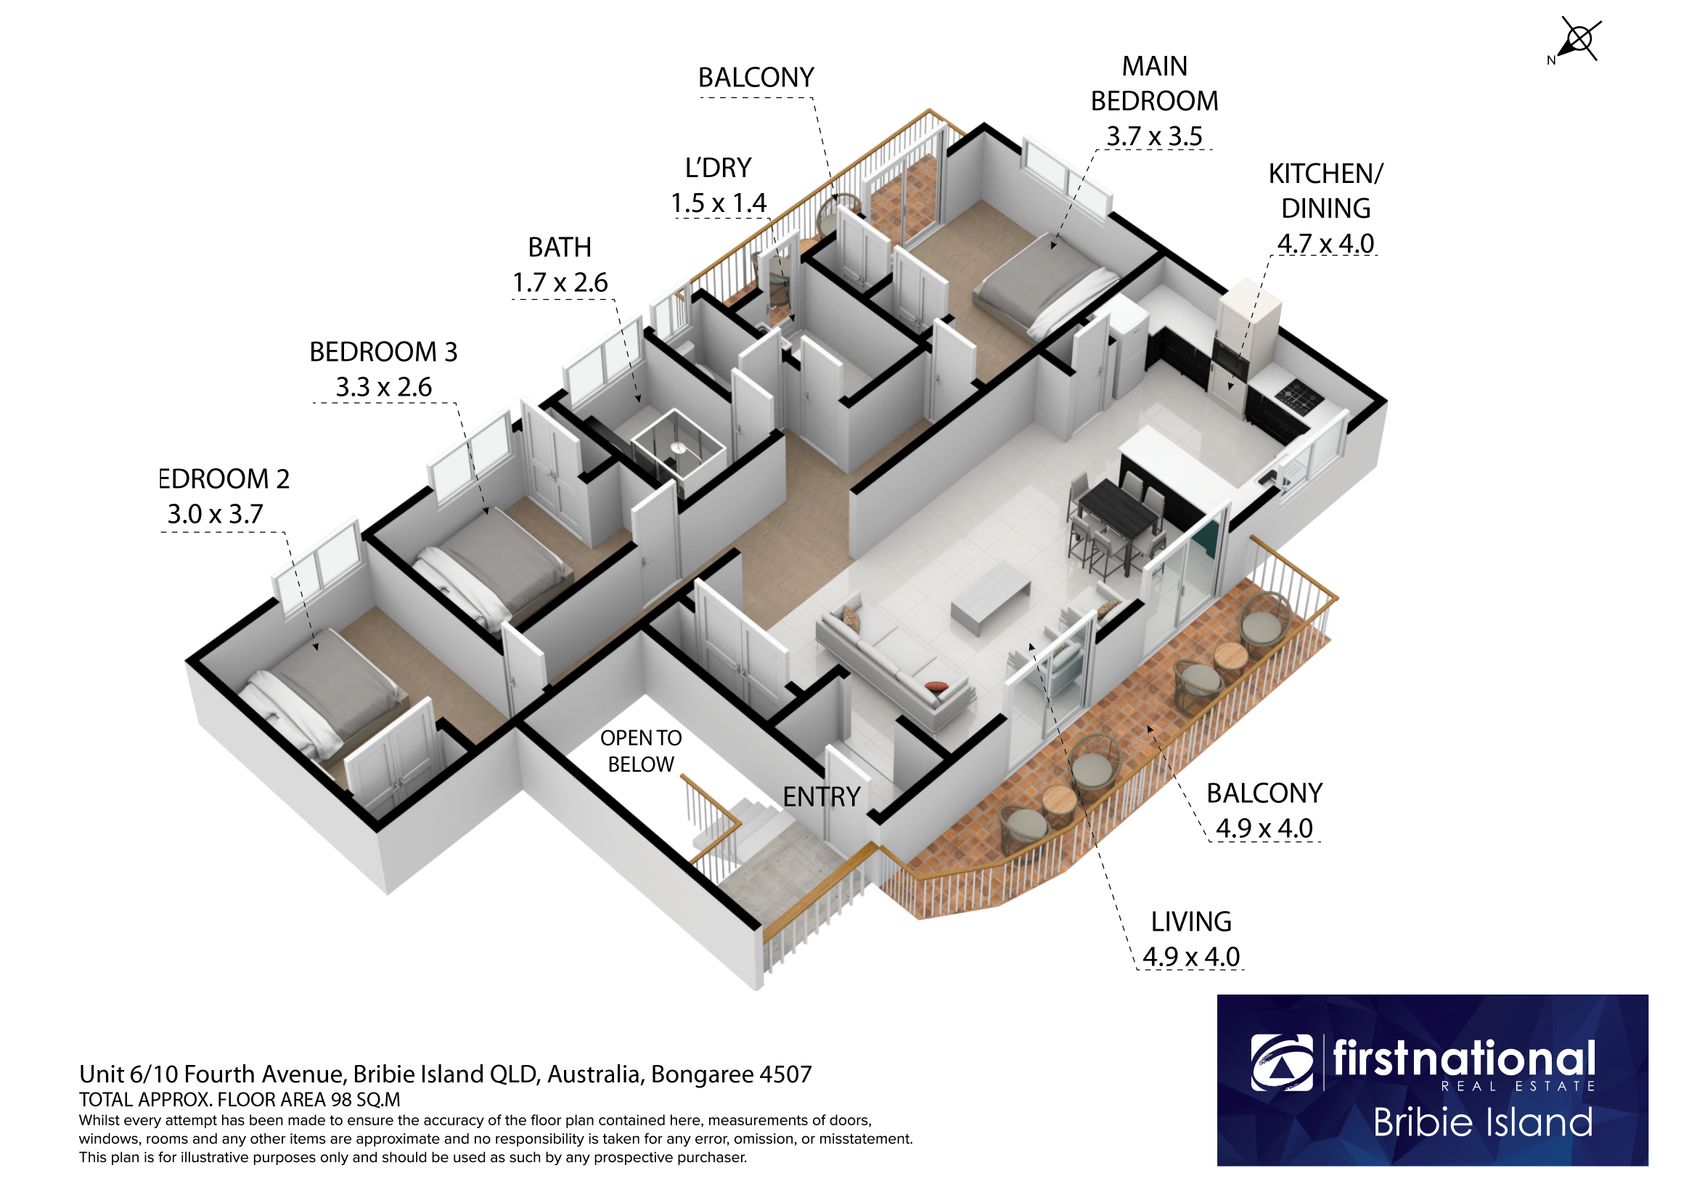 Unit 6 10 Fourth Ave Bribie island 3D Visual Floor Plan